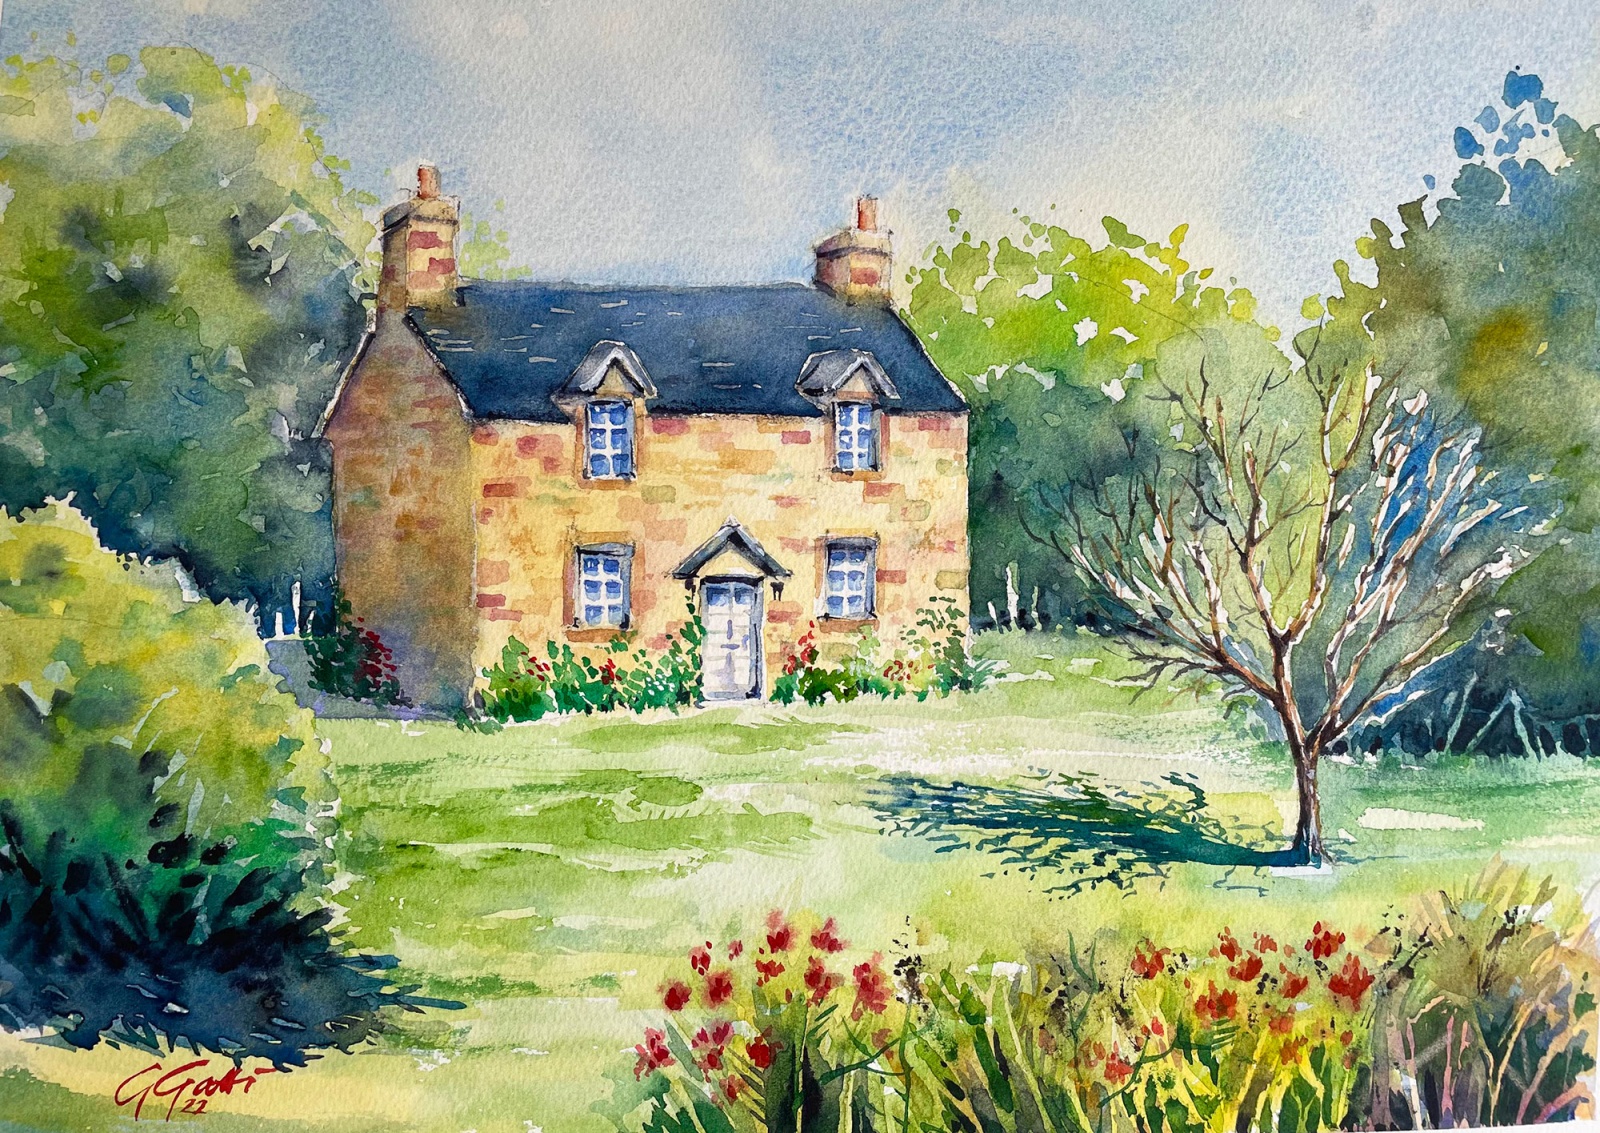 English cottage - watercolour on paper
31x41 cm